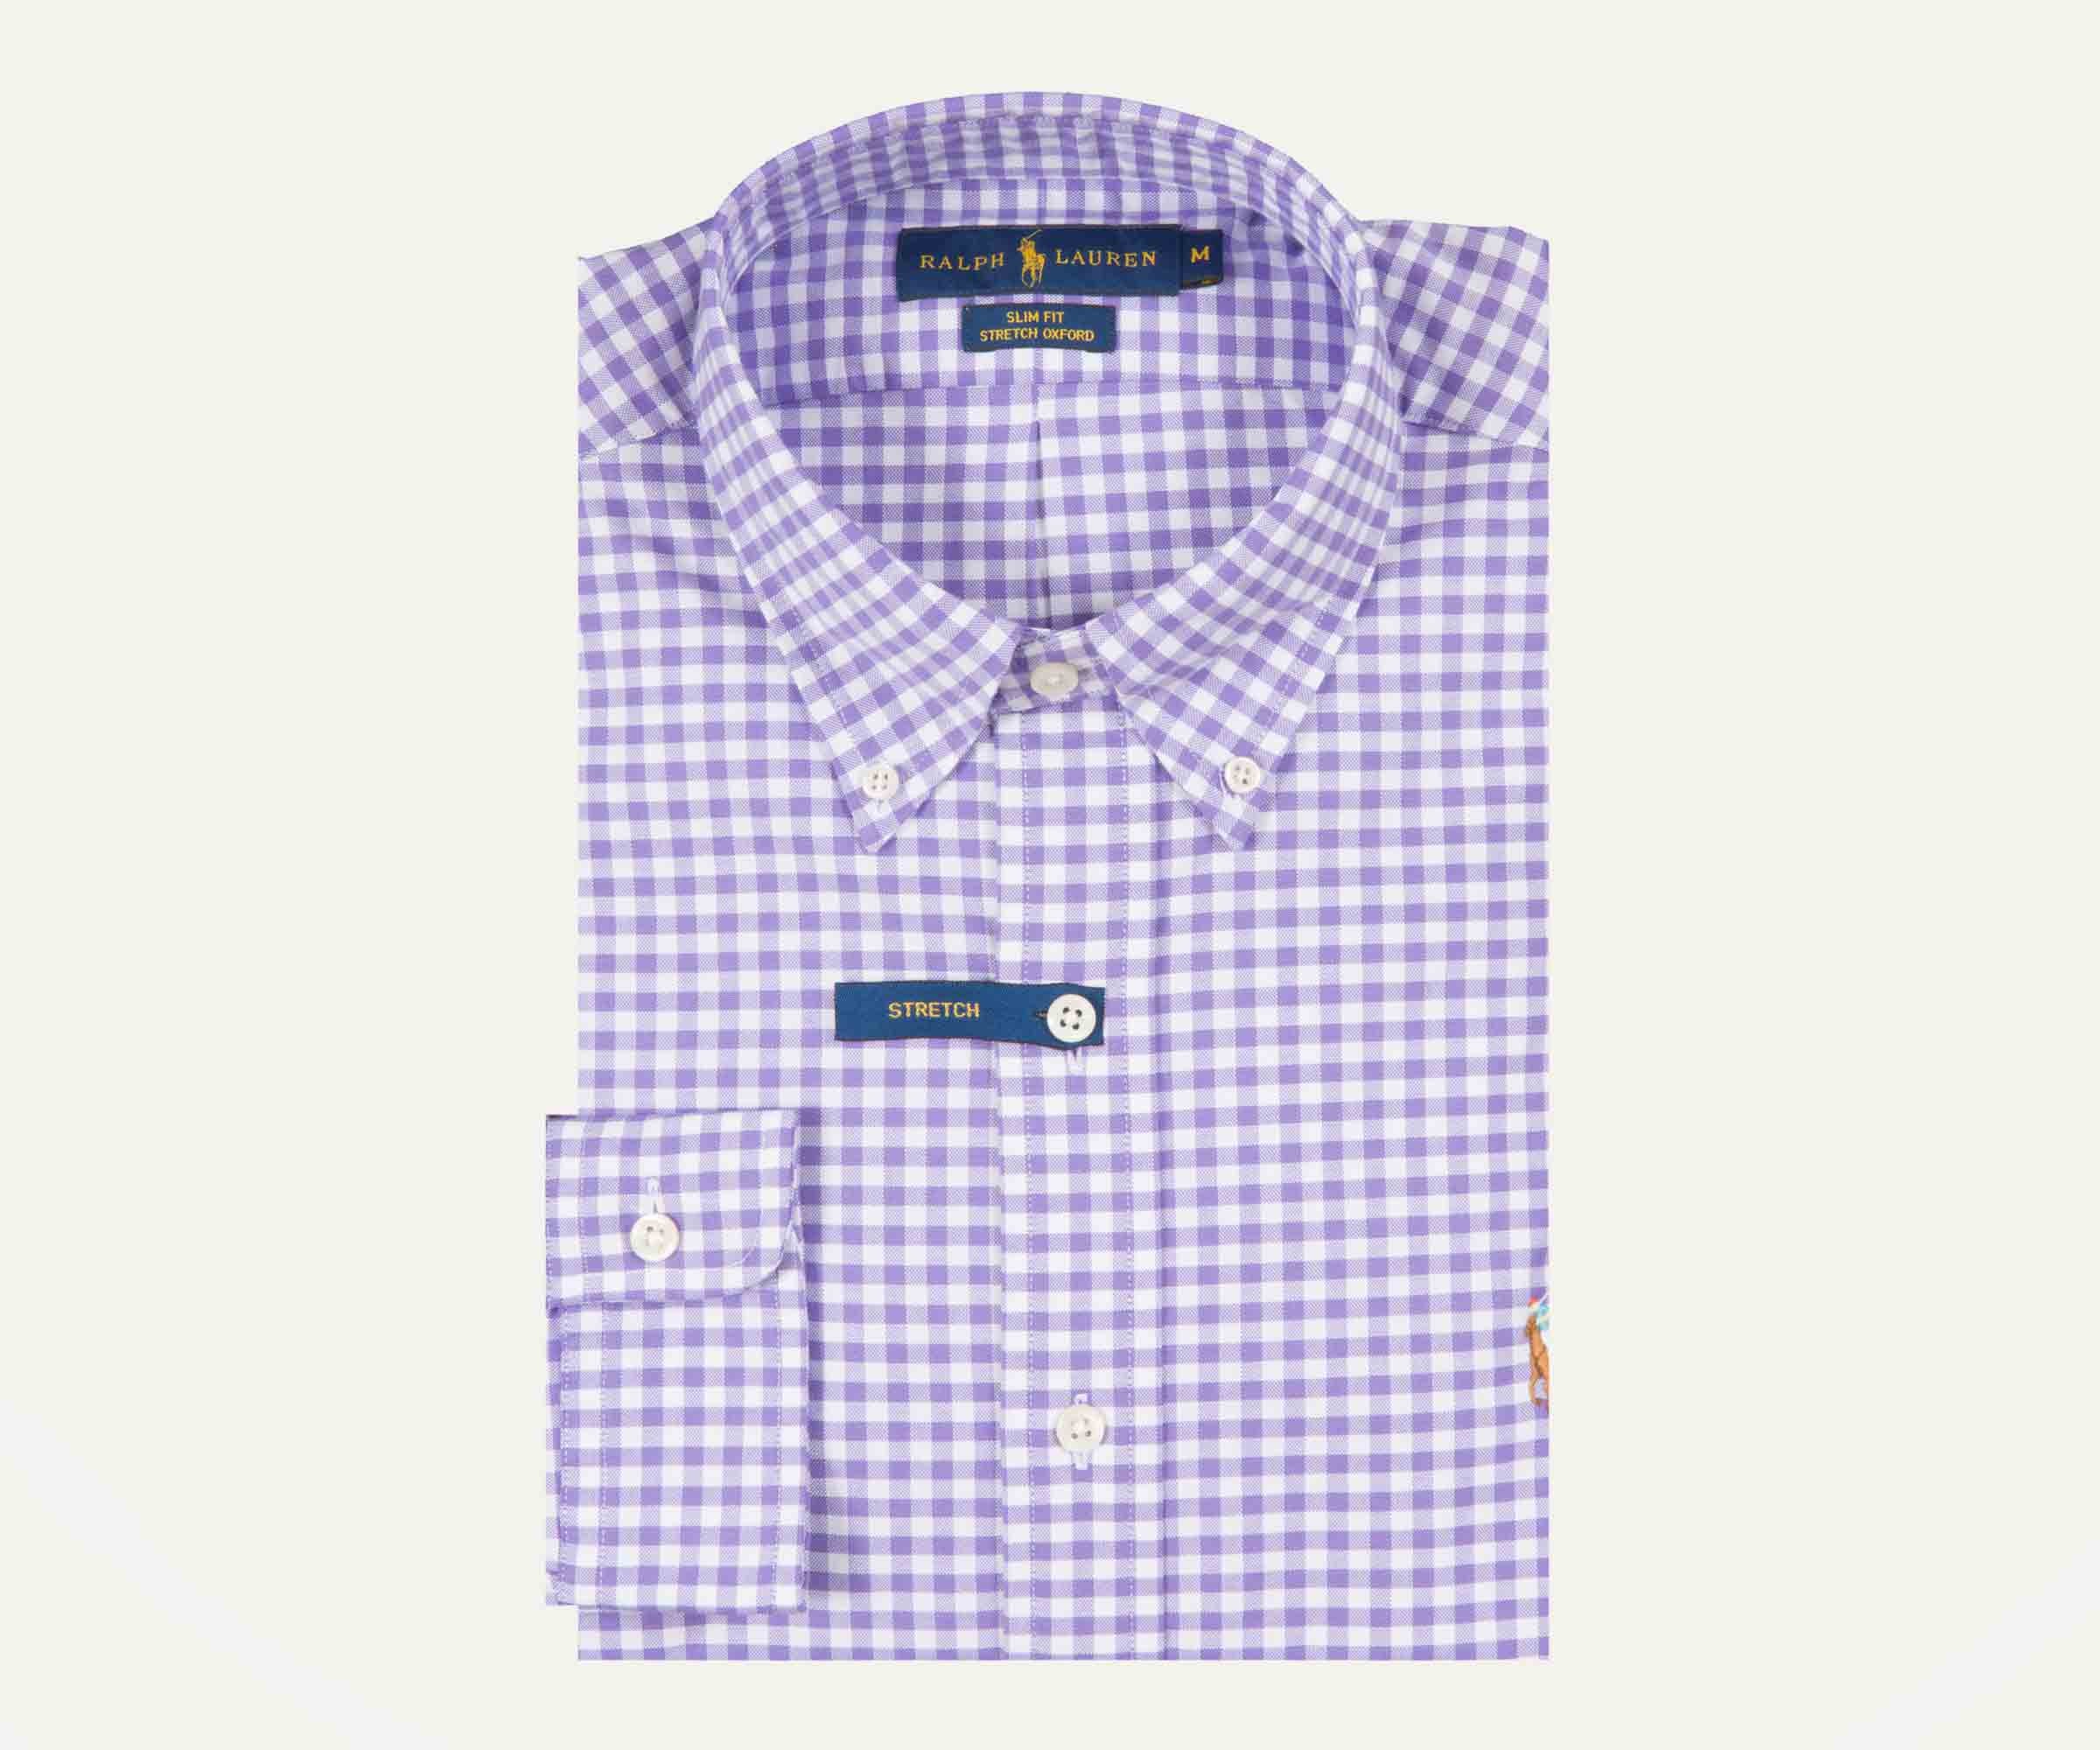 Polo Ralph Lauren Slim Fit Stretch Gingham Check Shirt Purple/White